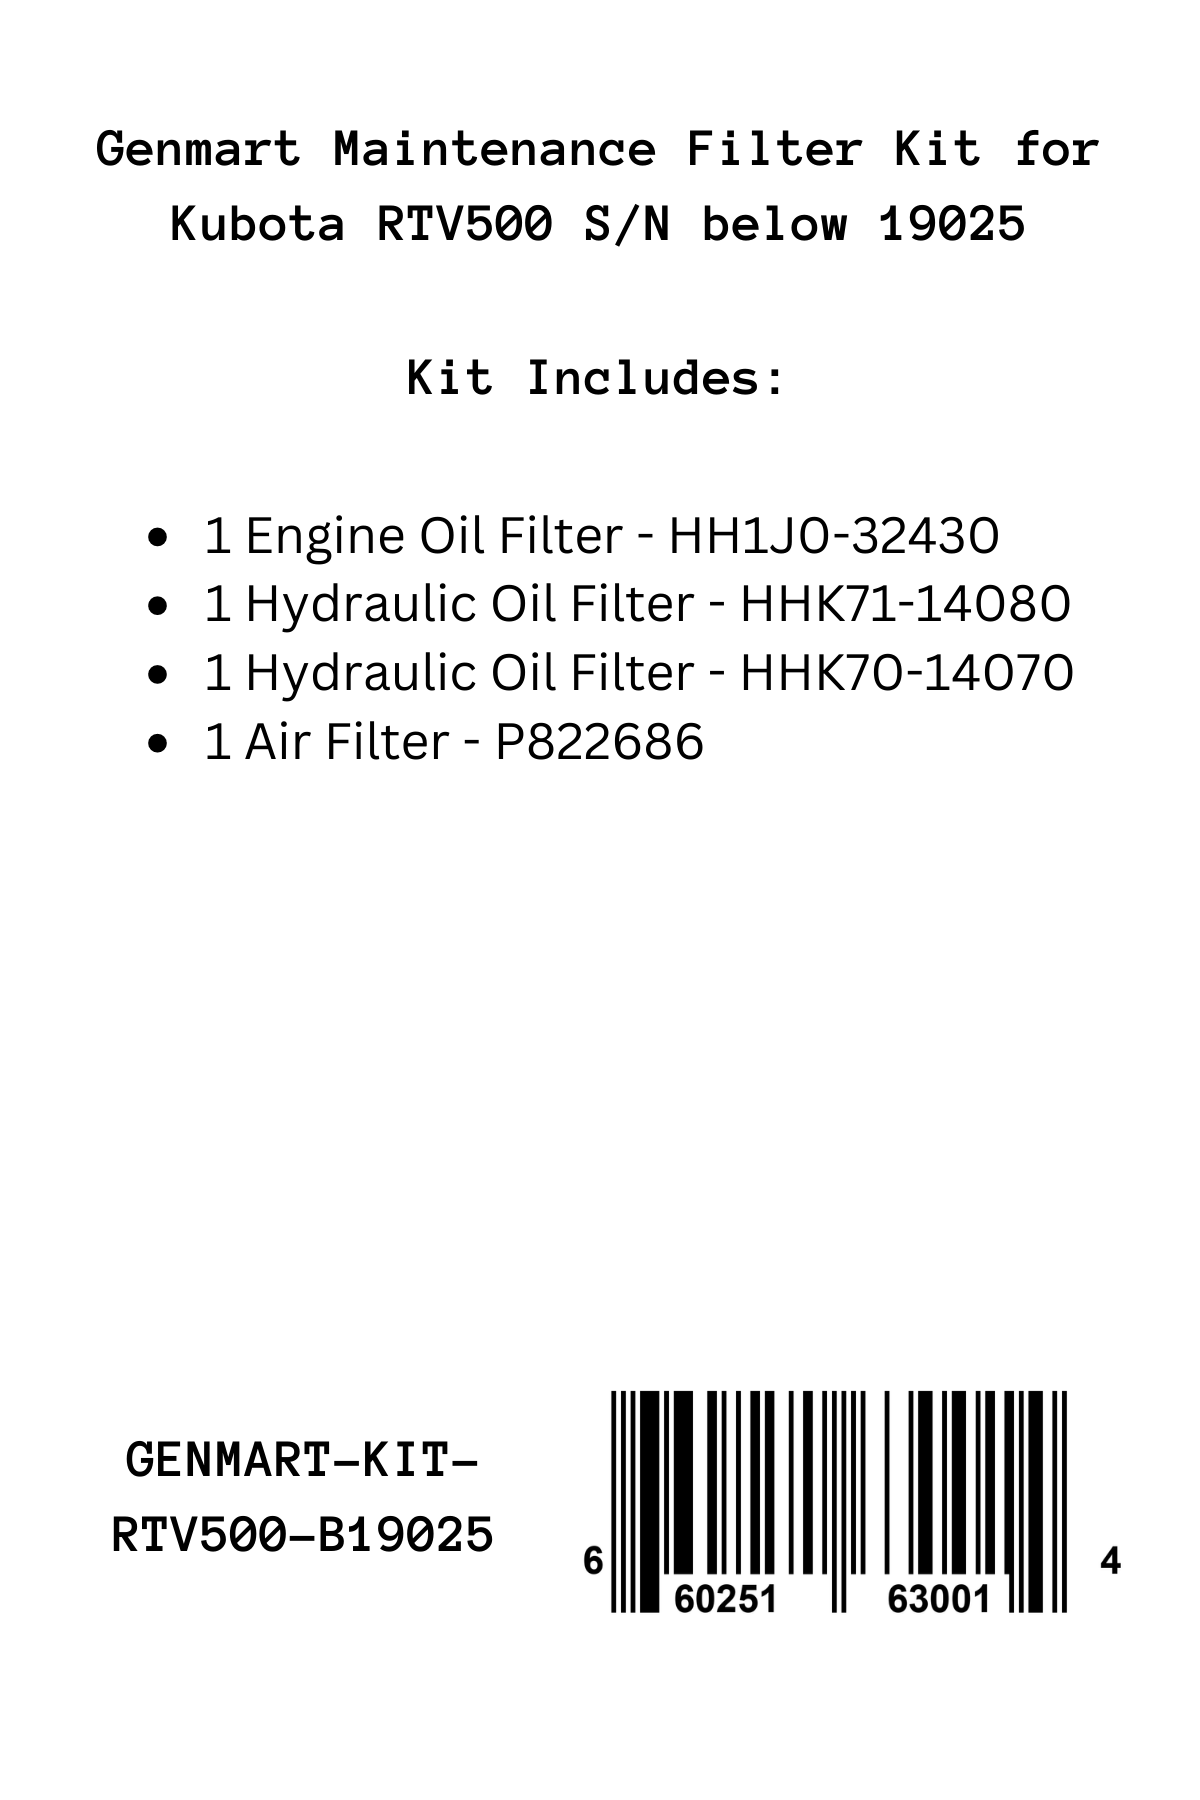 Genmart Maintenance Filter Kit for Kubota RTV500 (serial number 19024 and below)